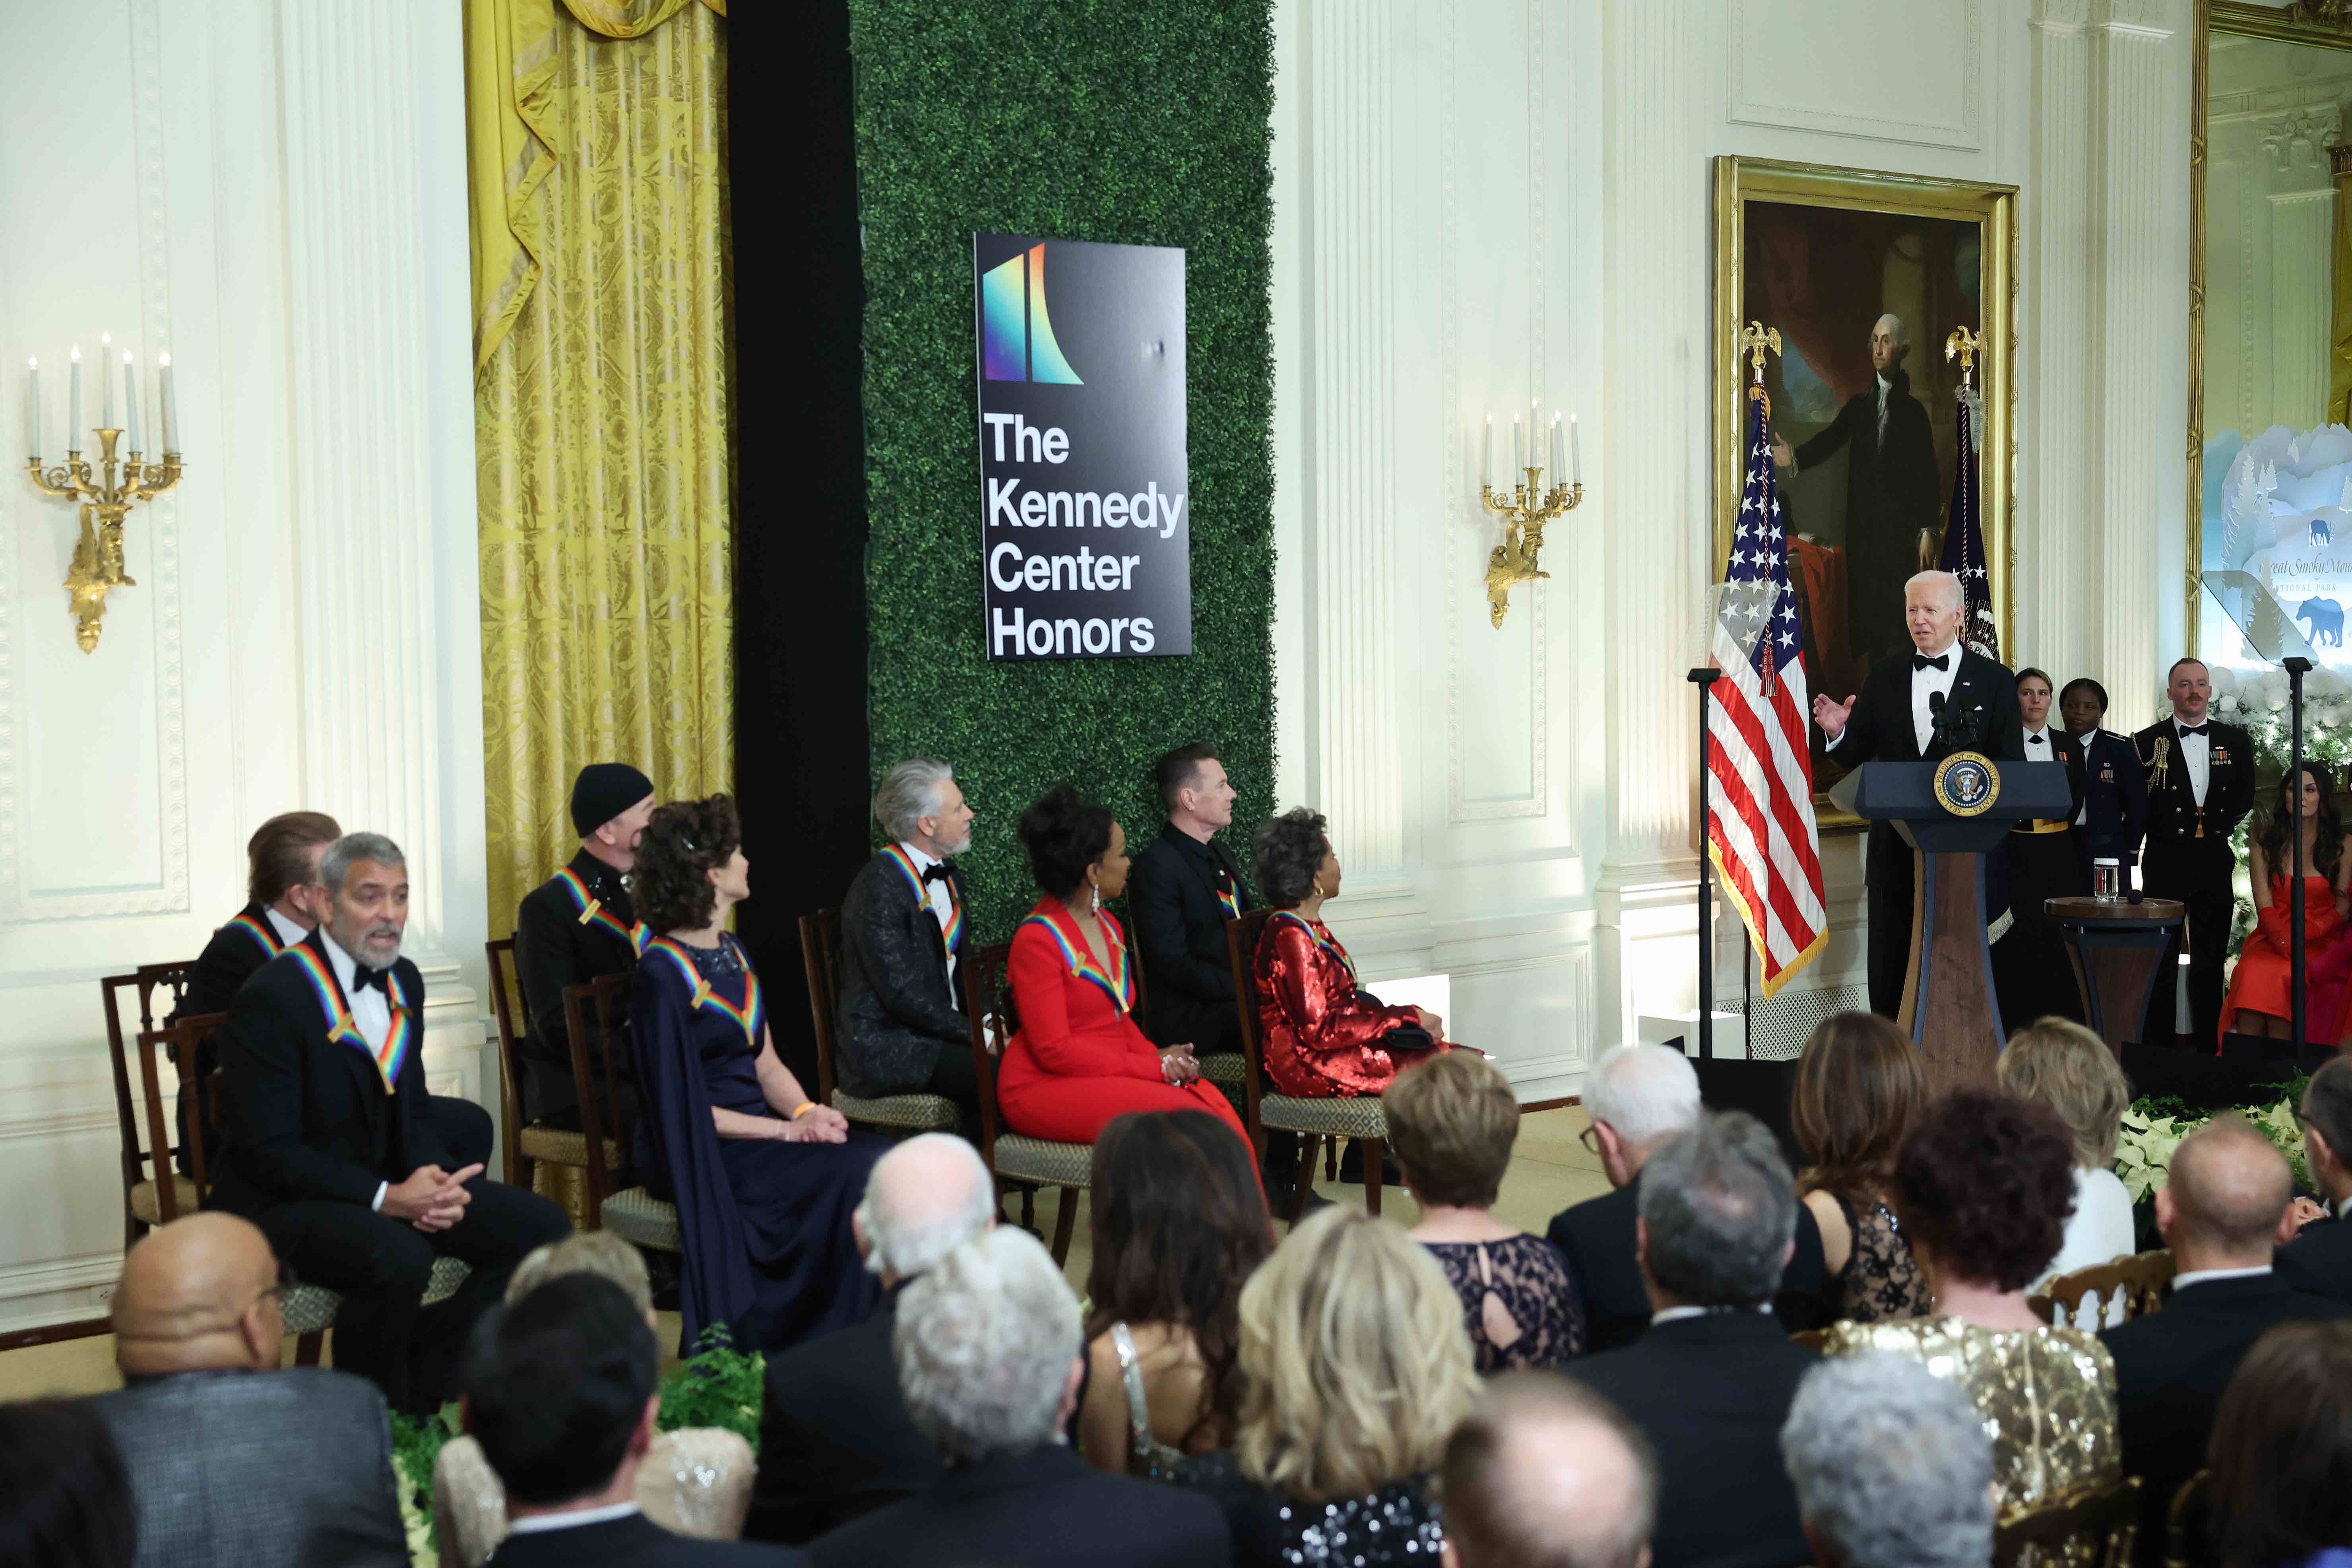 Kennedy Center lifetime achievement award